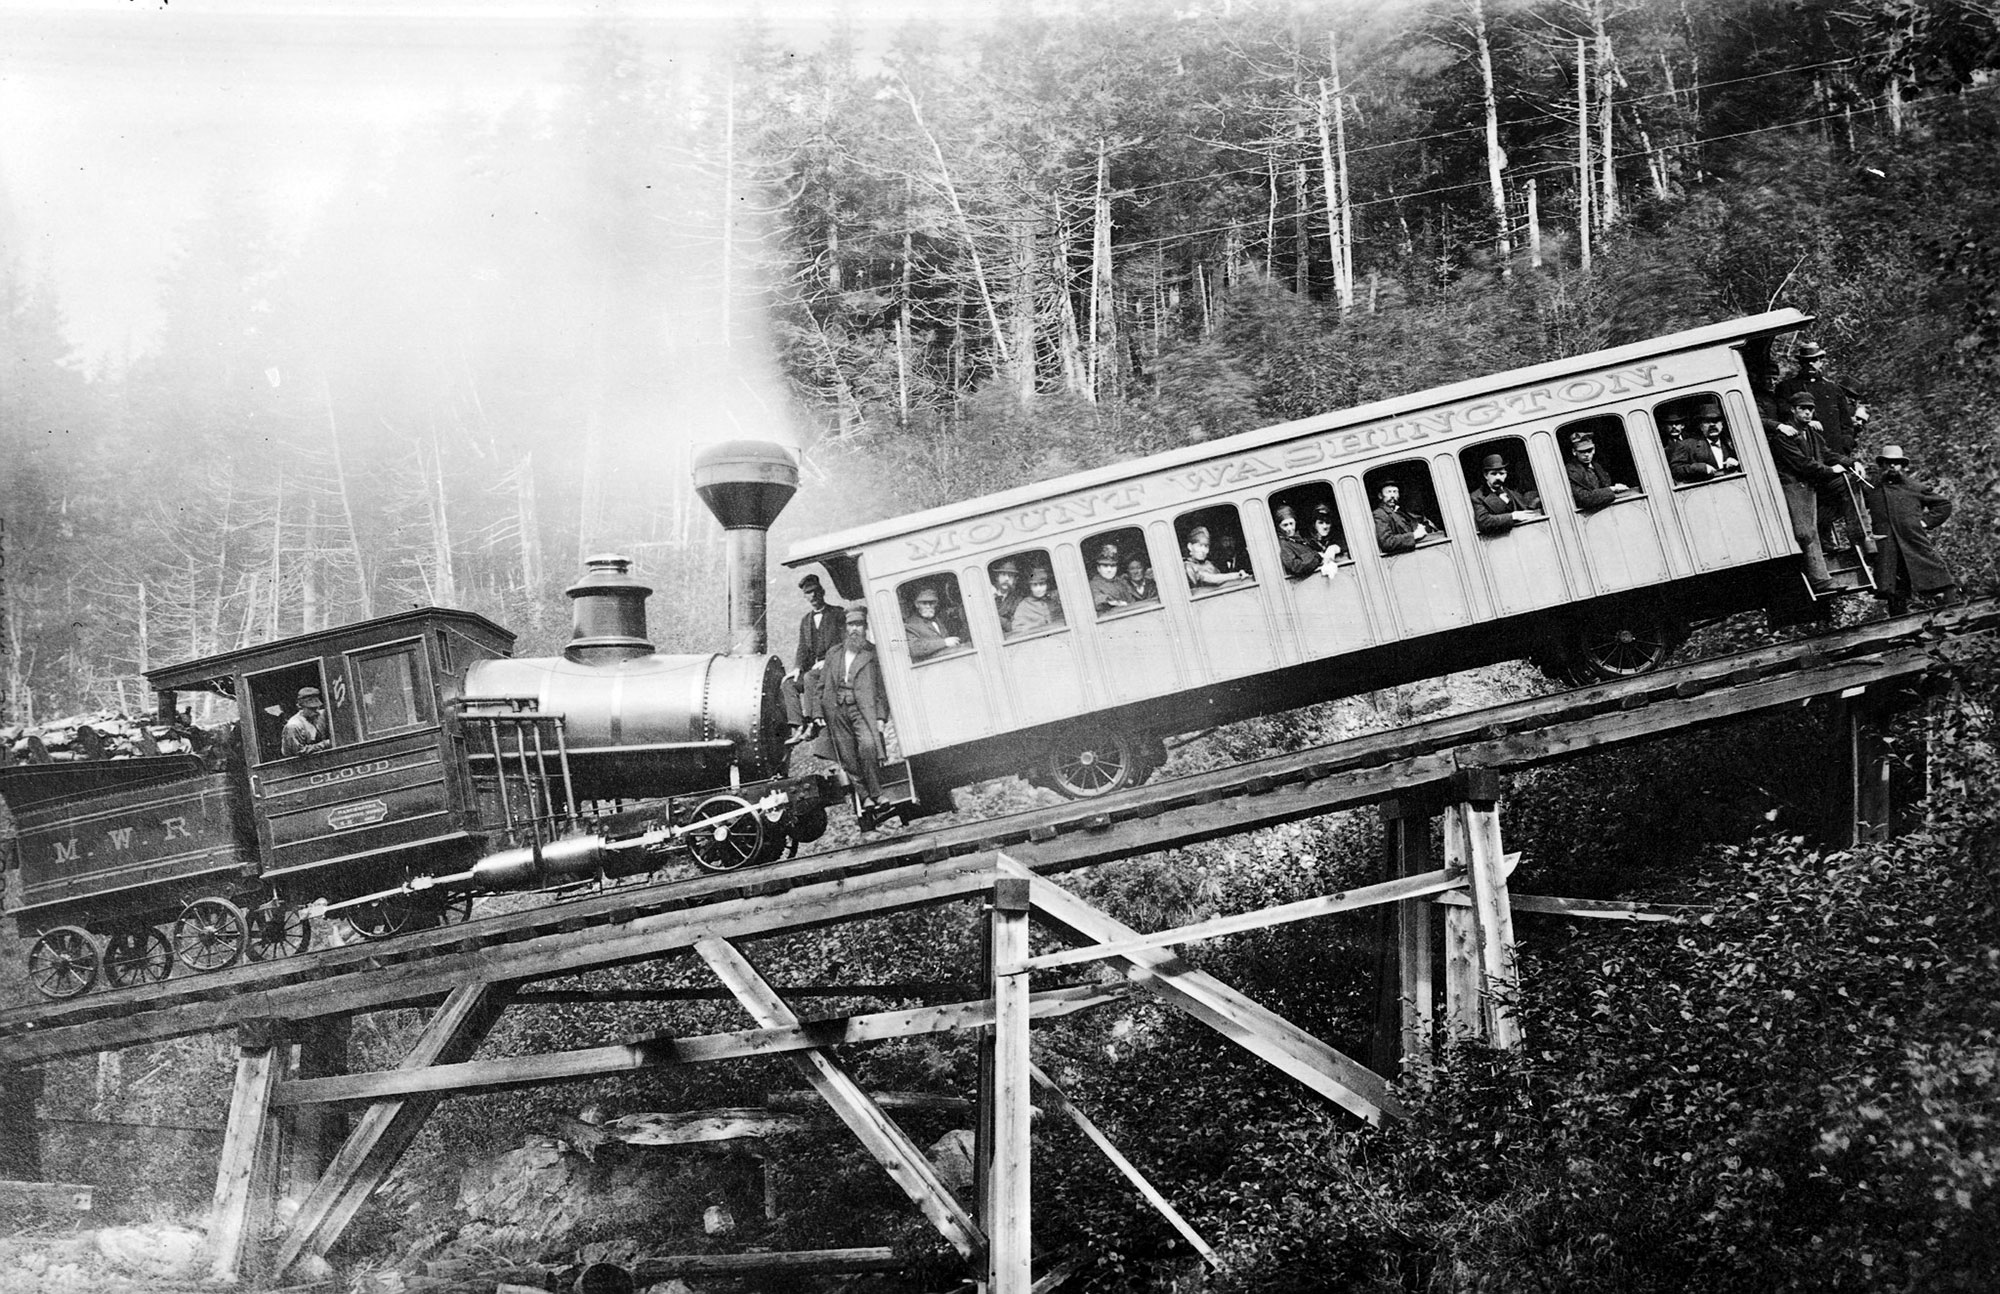 Courtesy: The Mount Washington Cog Railway